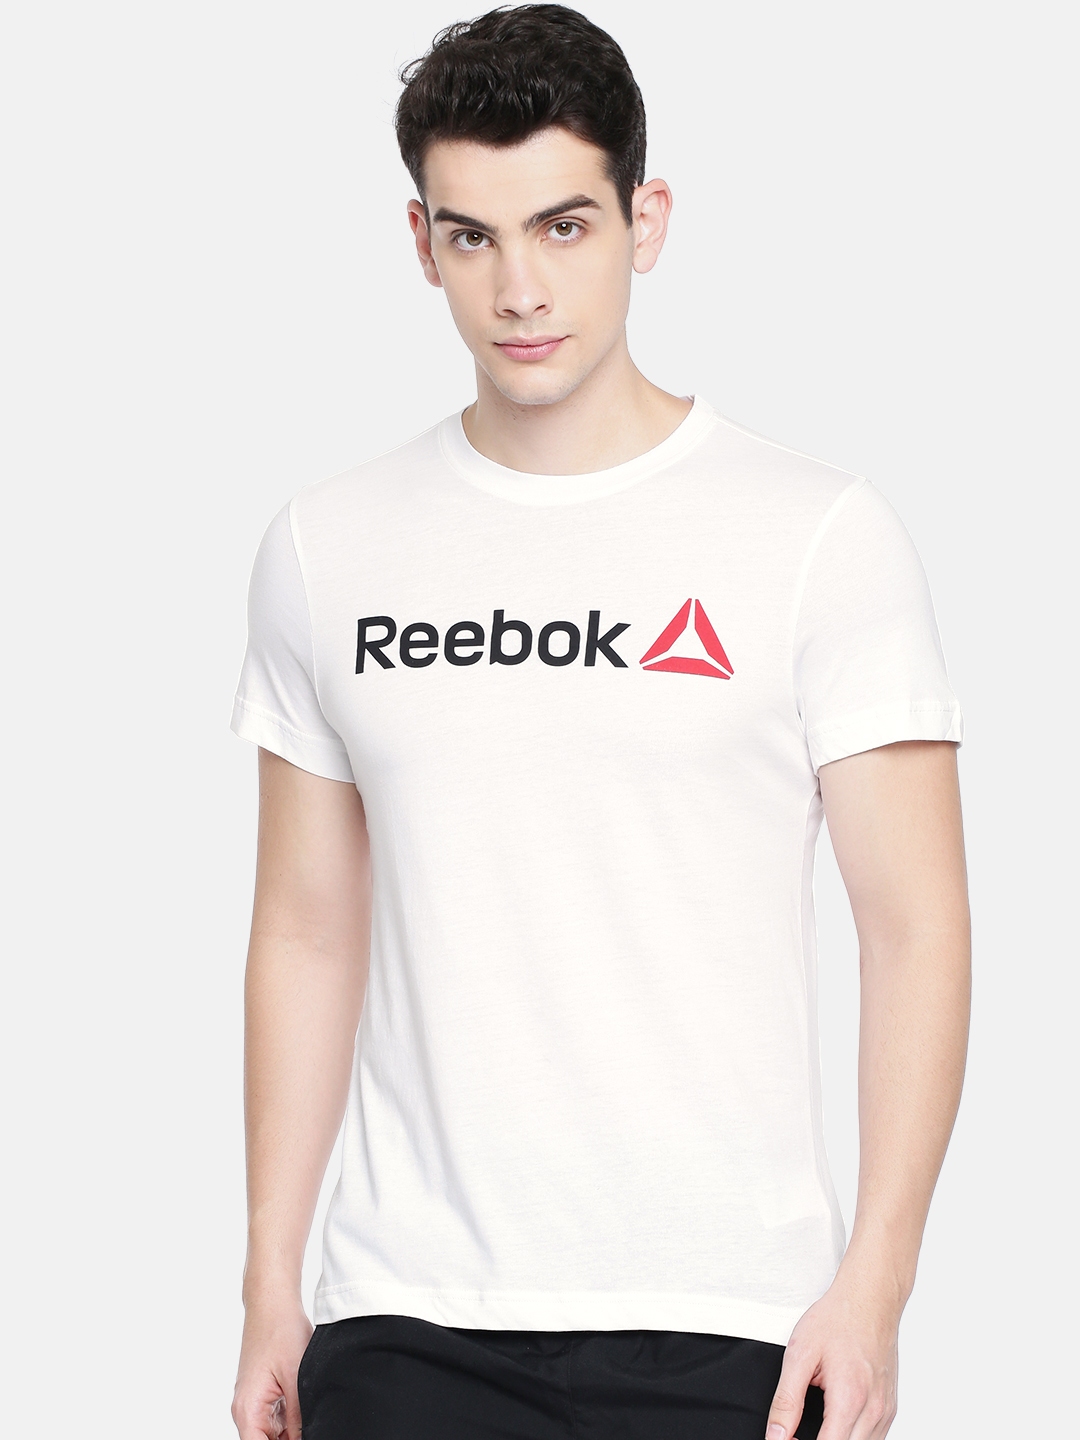 reebok full t shirt